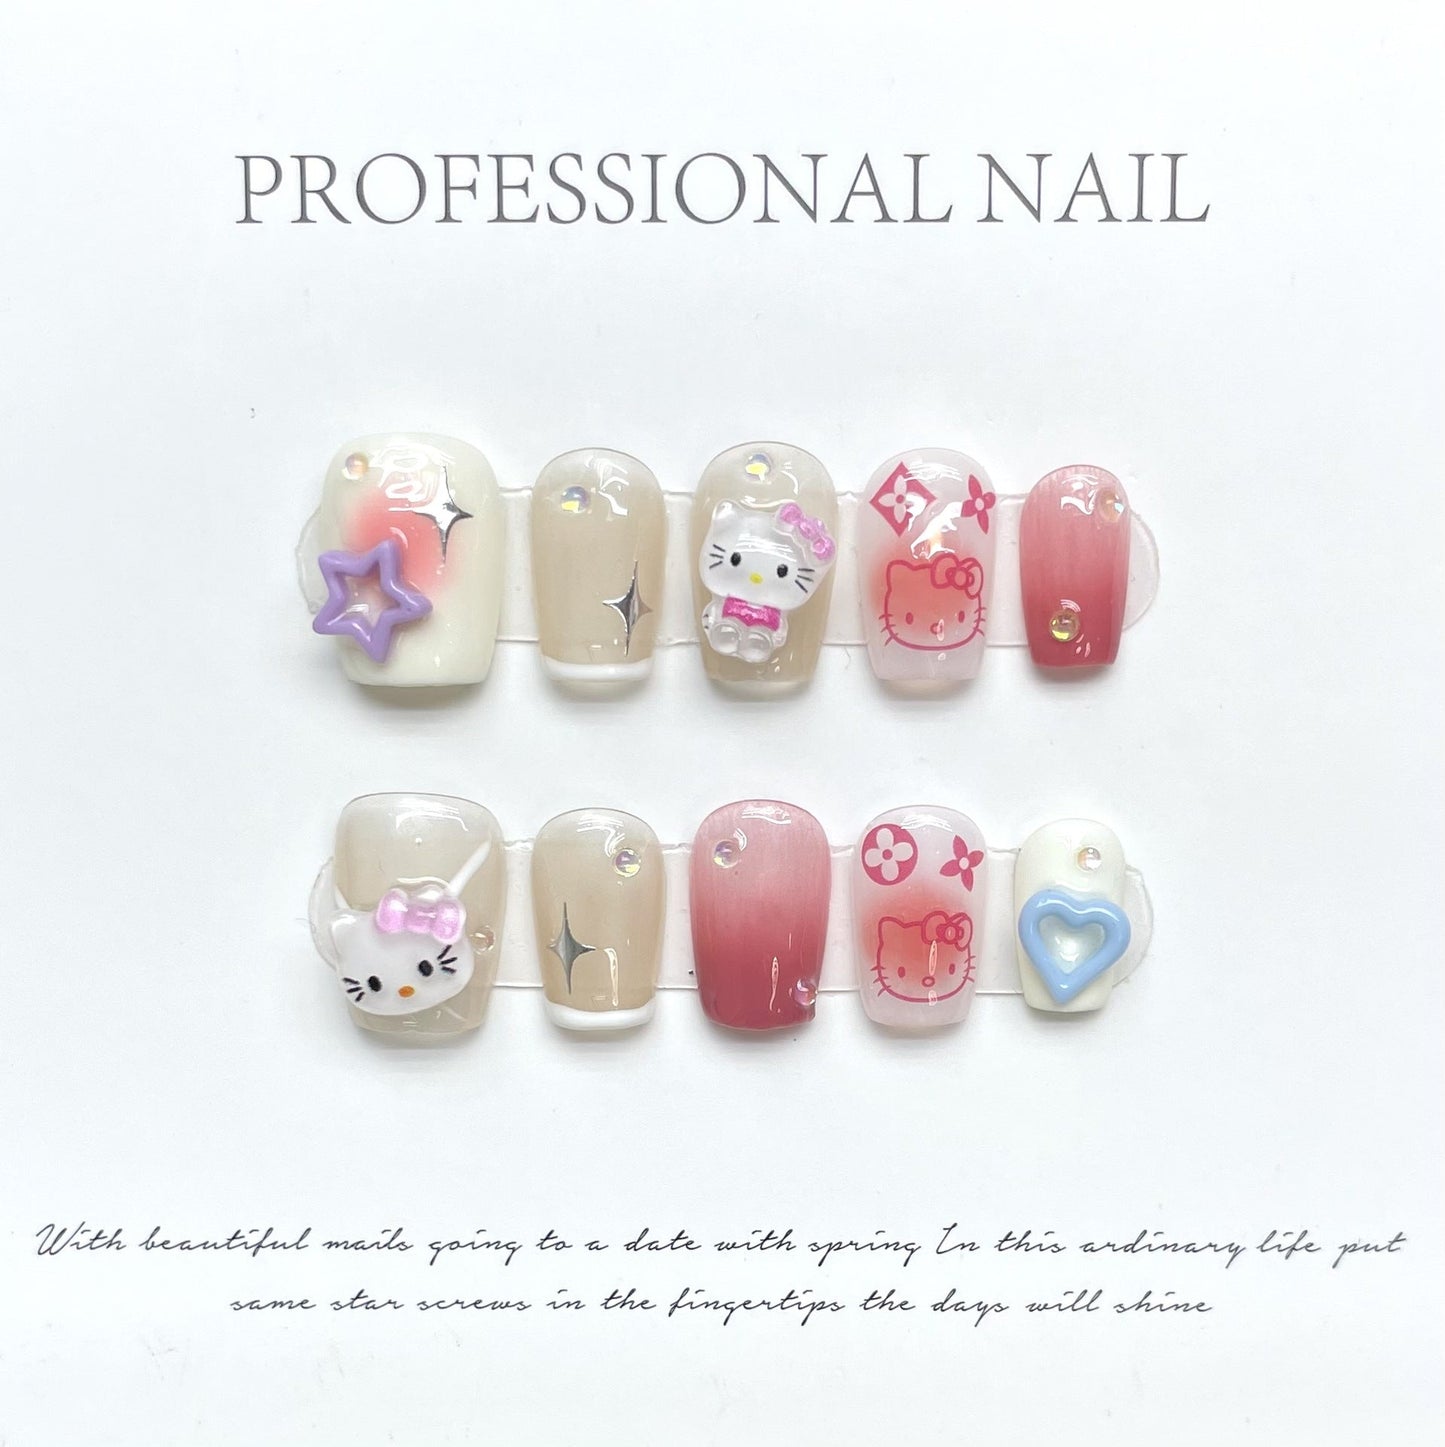 1094 Cute Cat style press on nails 100% handmade false nails pink